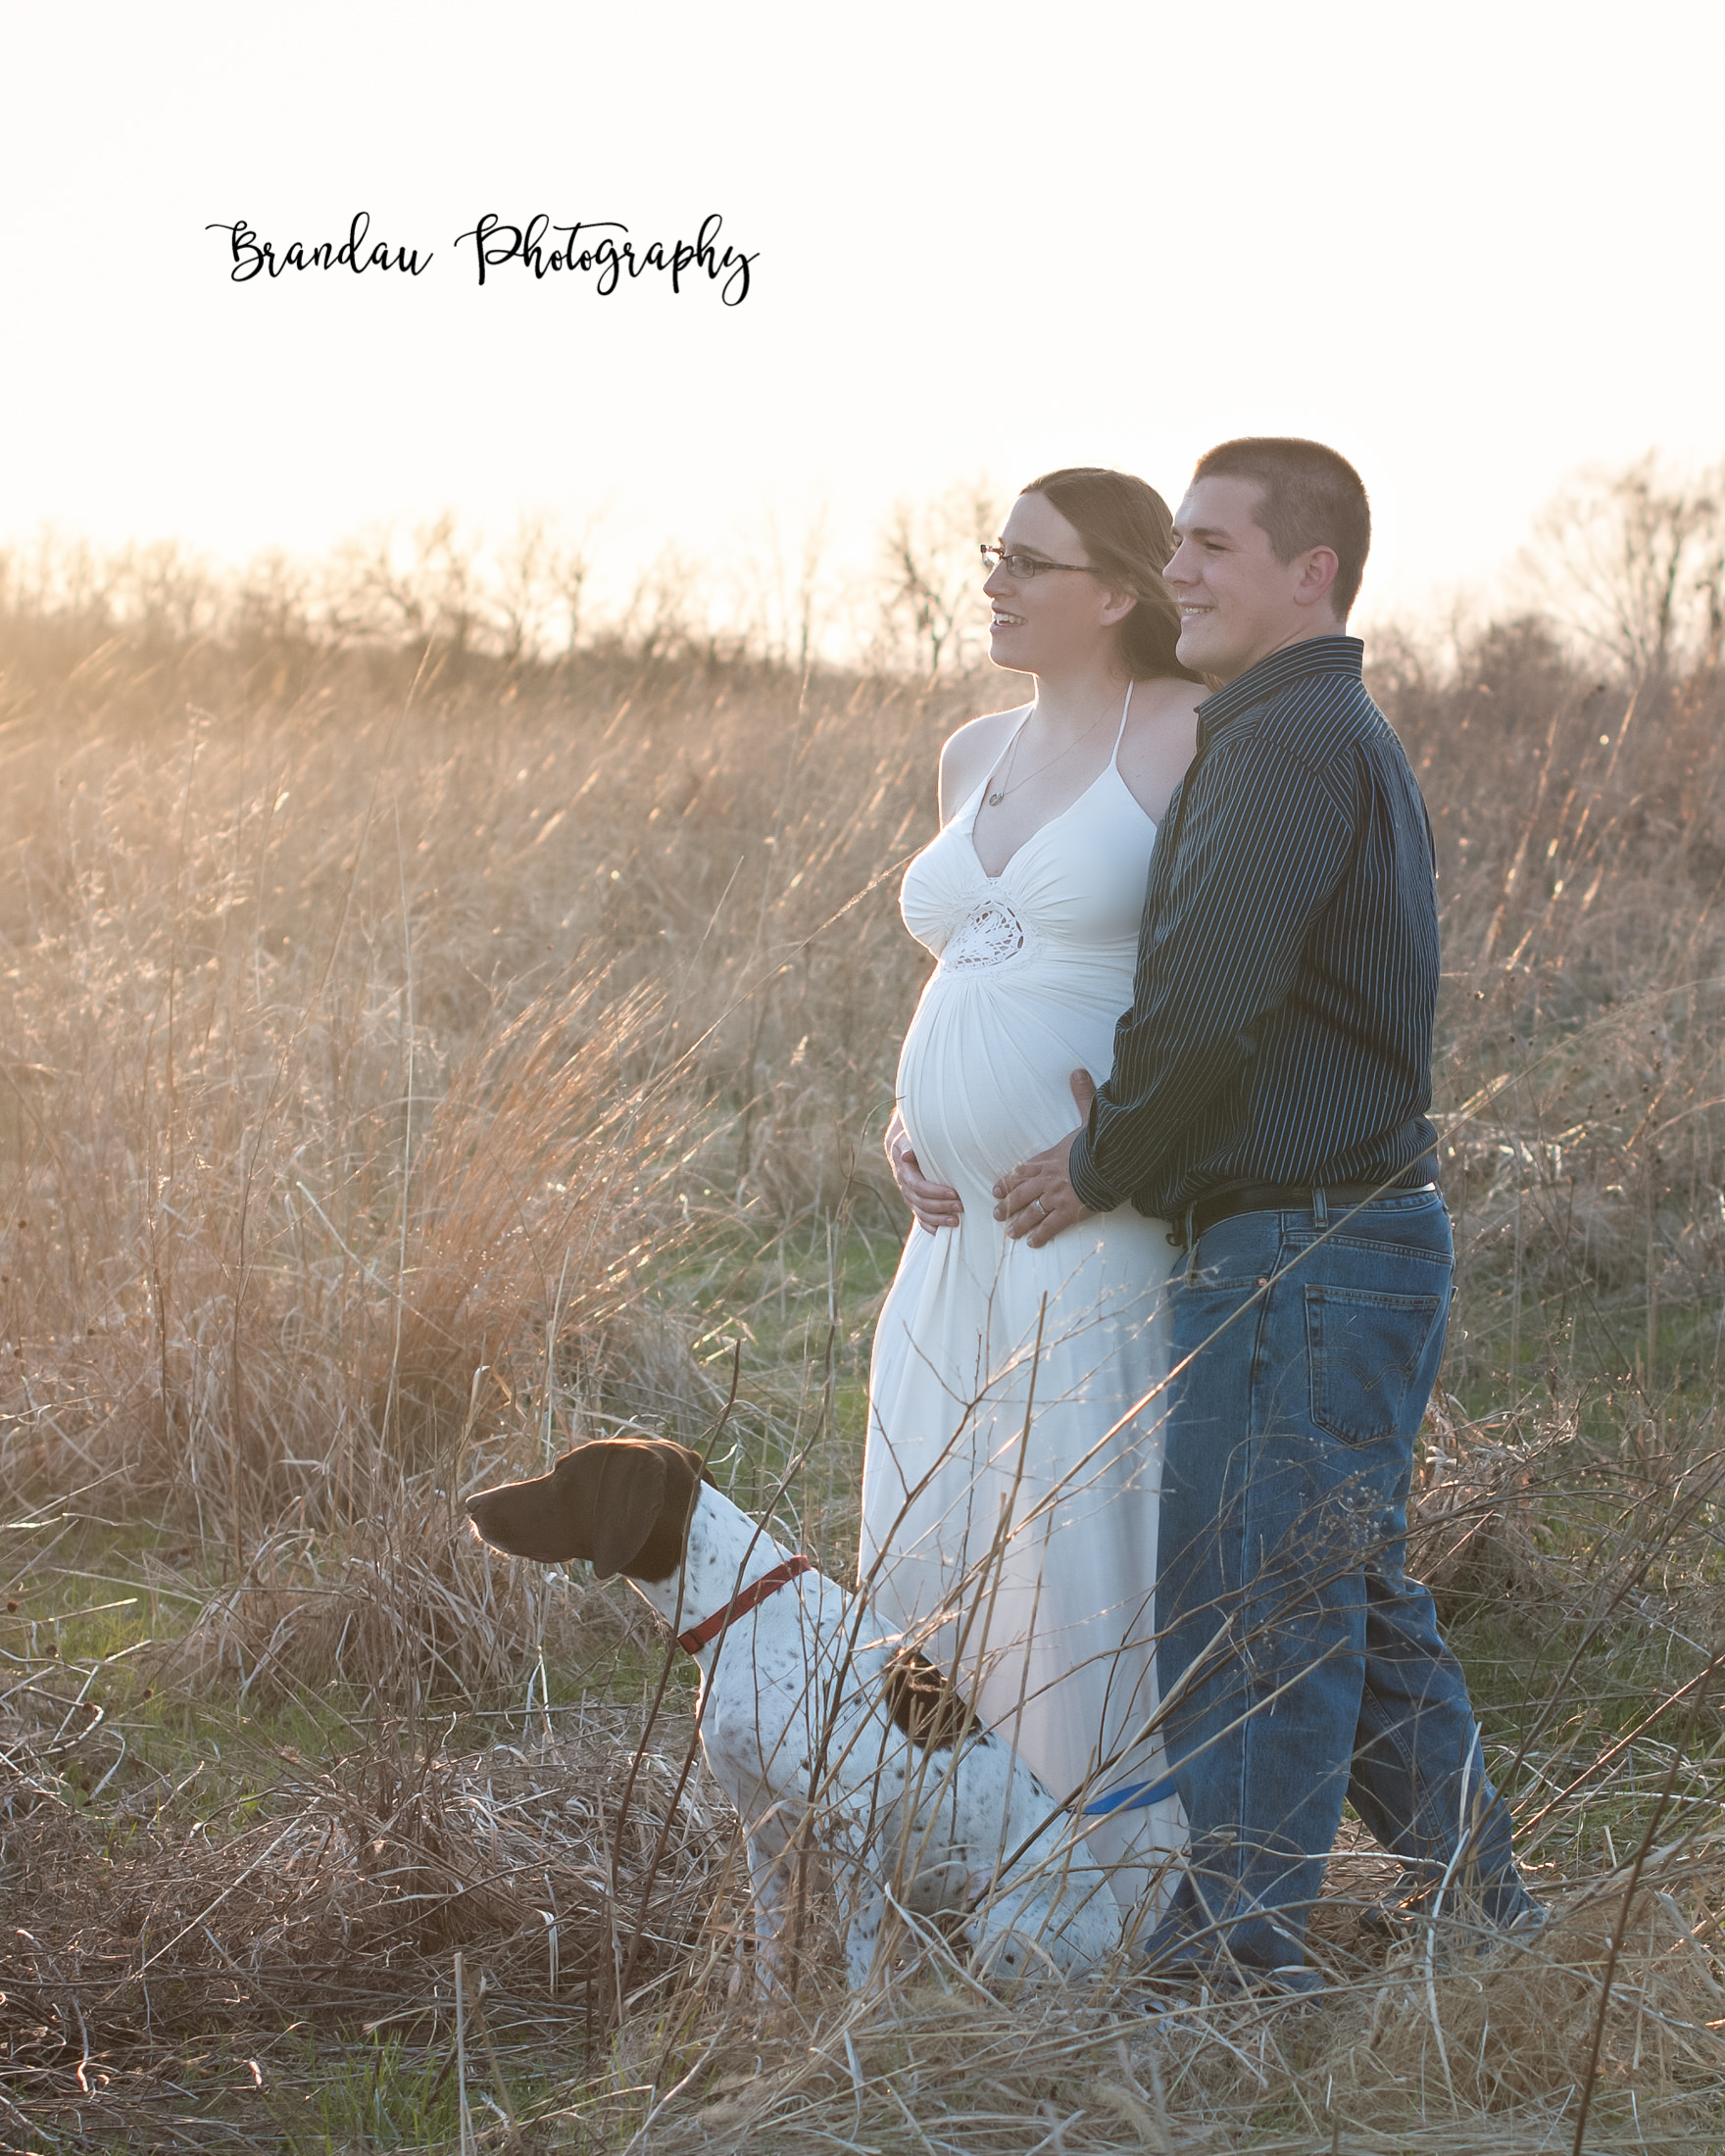 Brandau Photography - Central Iowa Maternity - Ames Iowa